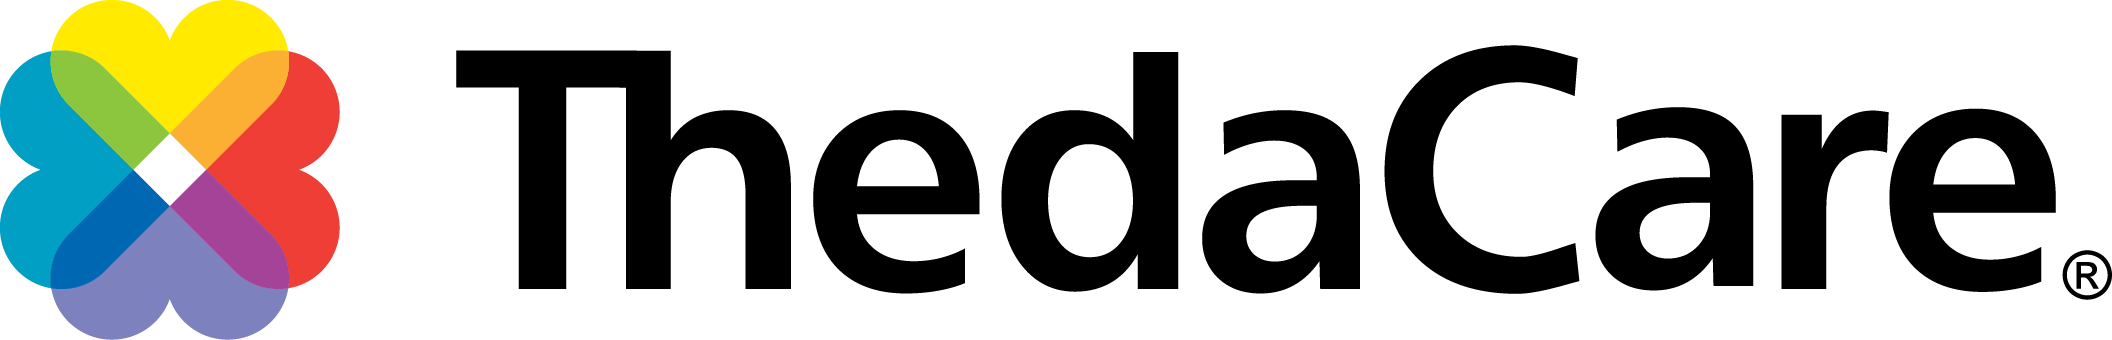 ThedaCare logo